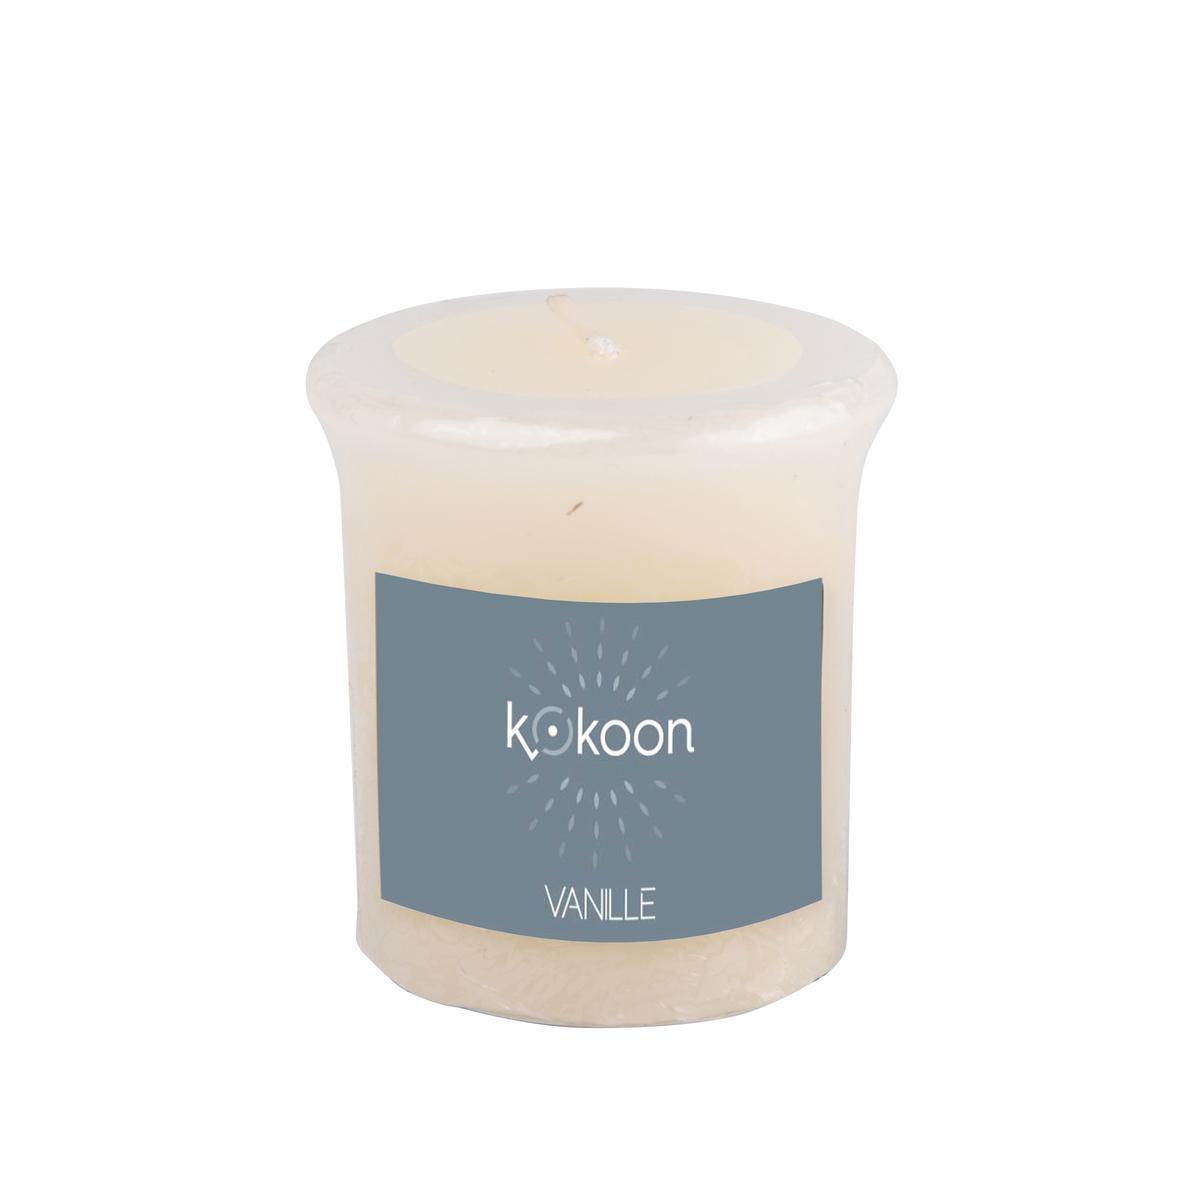 Bougie en paraffine parfum vanille - 4,4 x 4,5 cm - Blanc ivoire